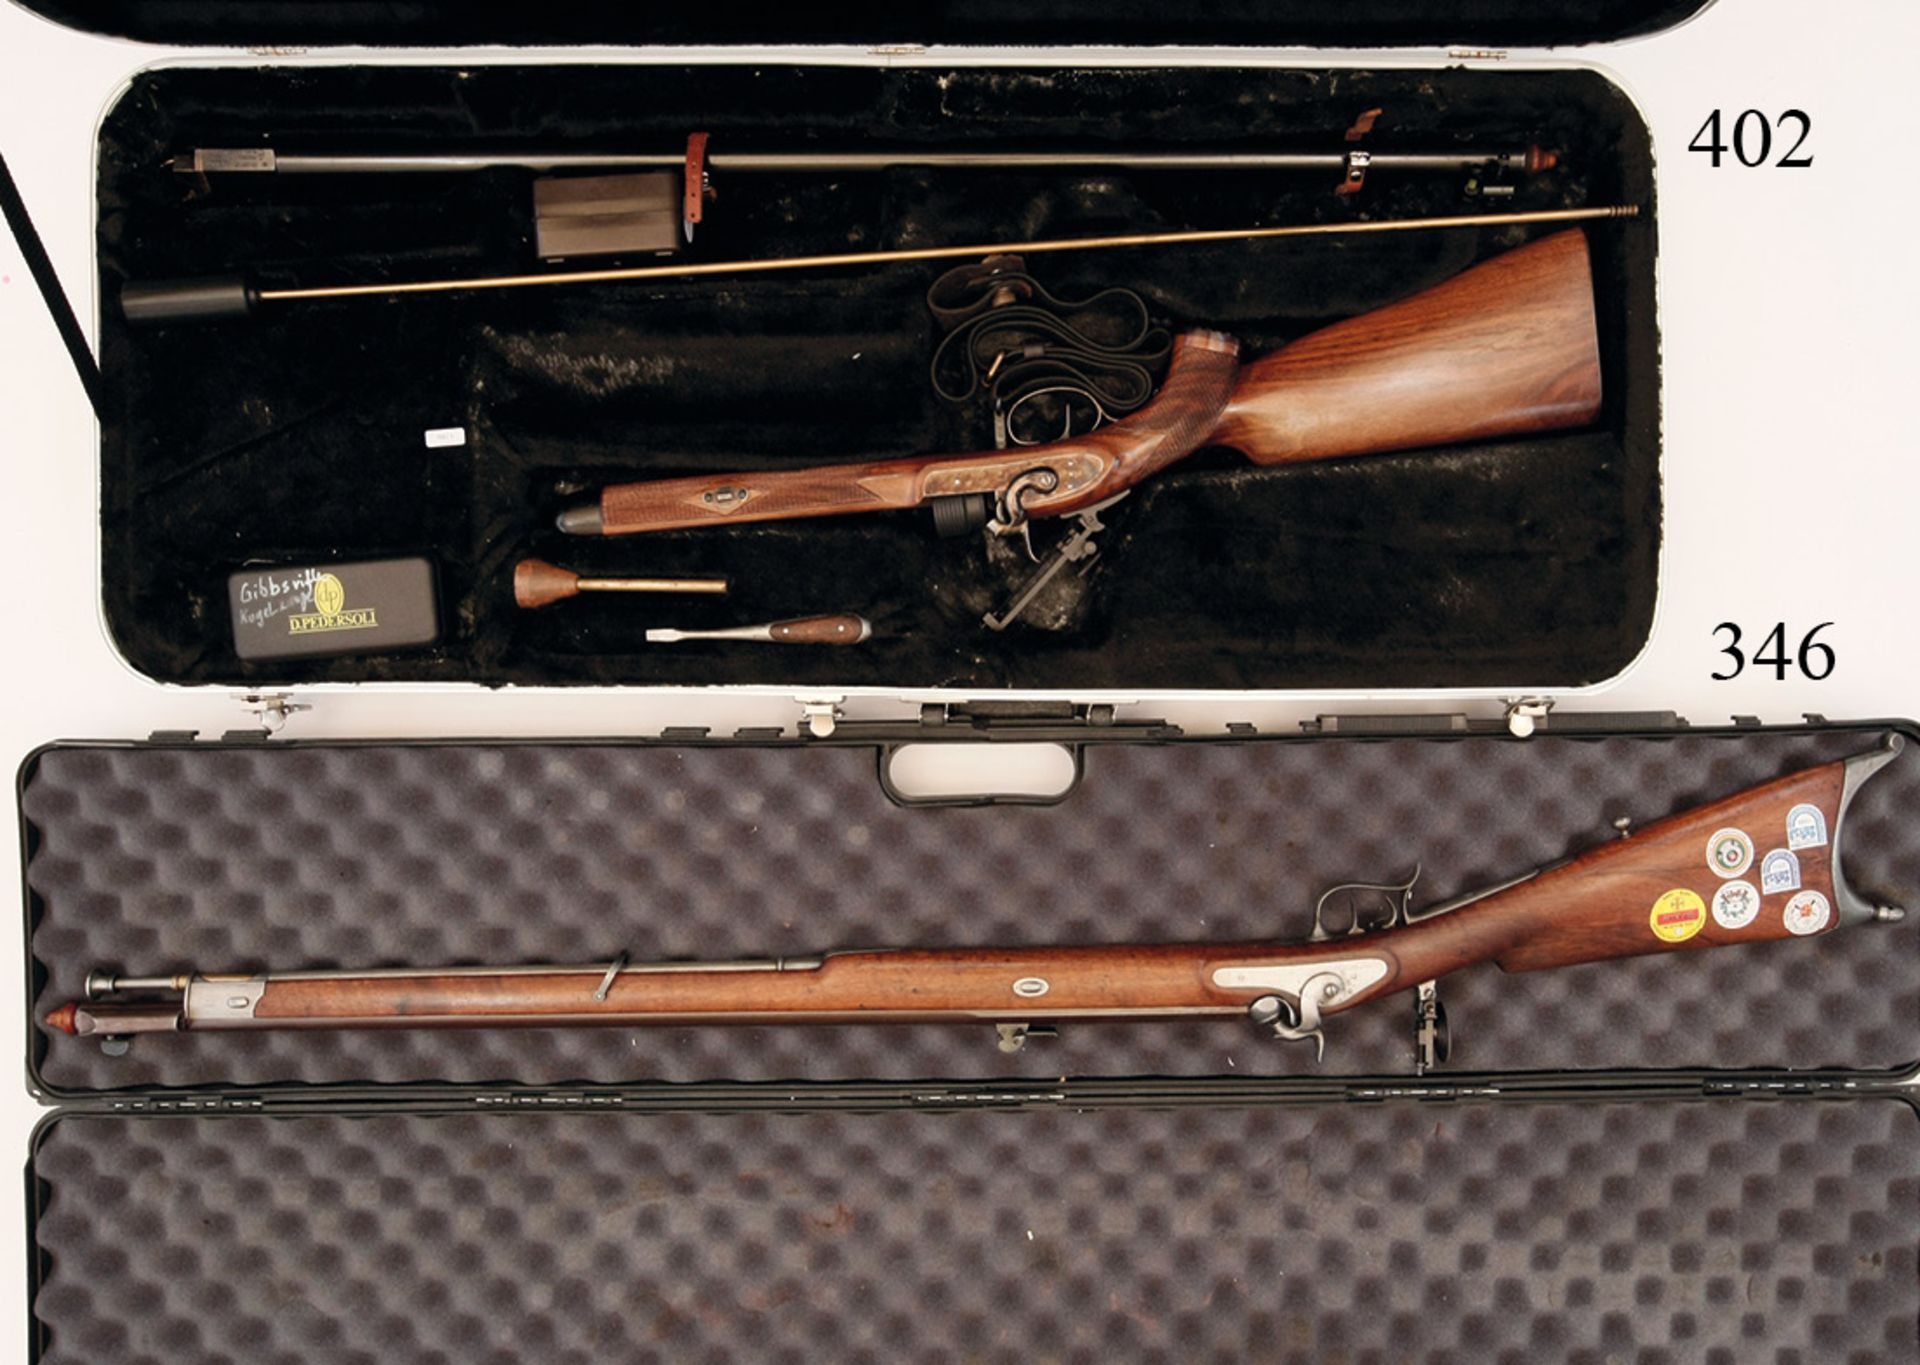 Sportschützenwaffe, Perkussion, Gibbs rifle, Cal. 40